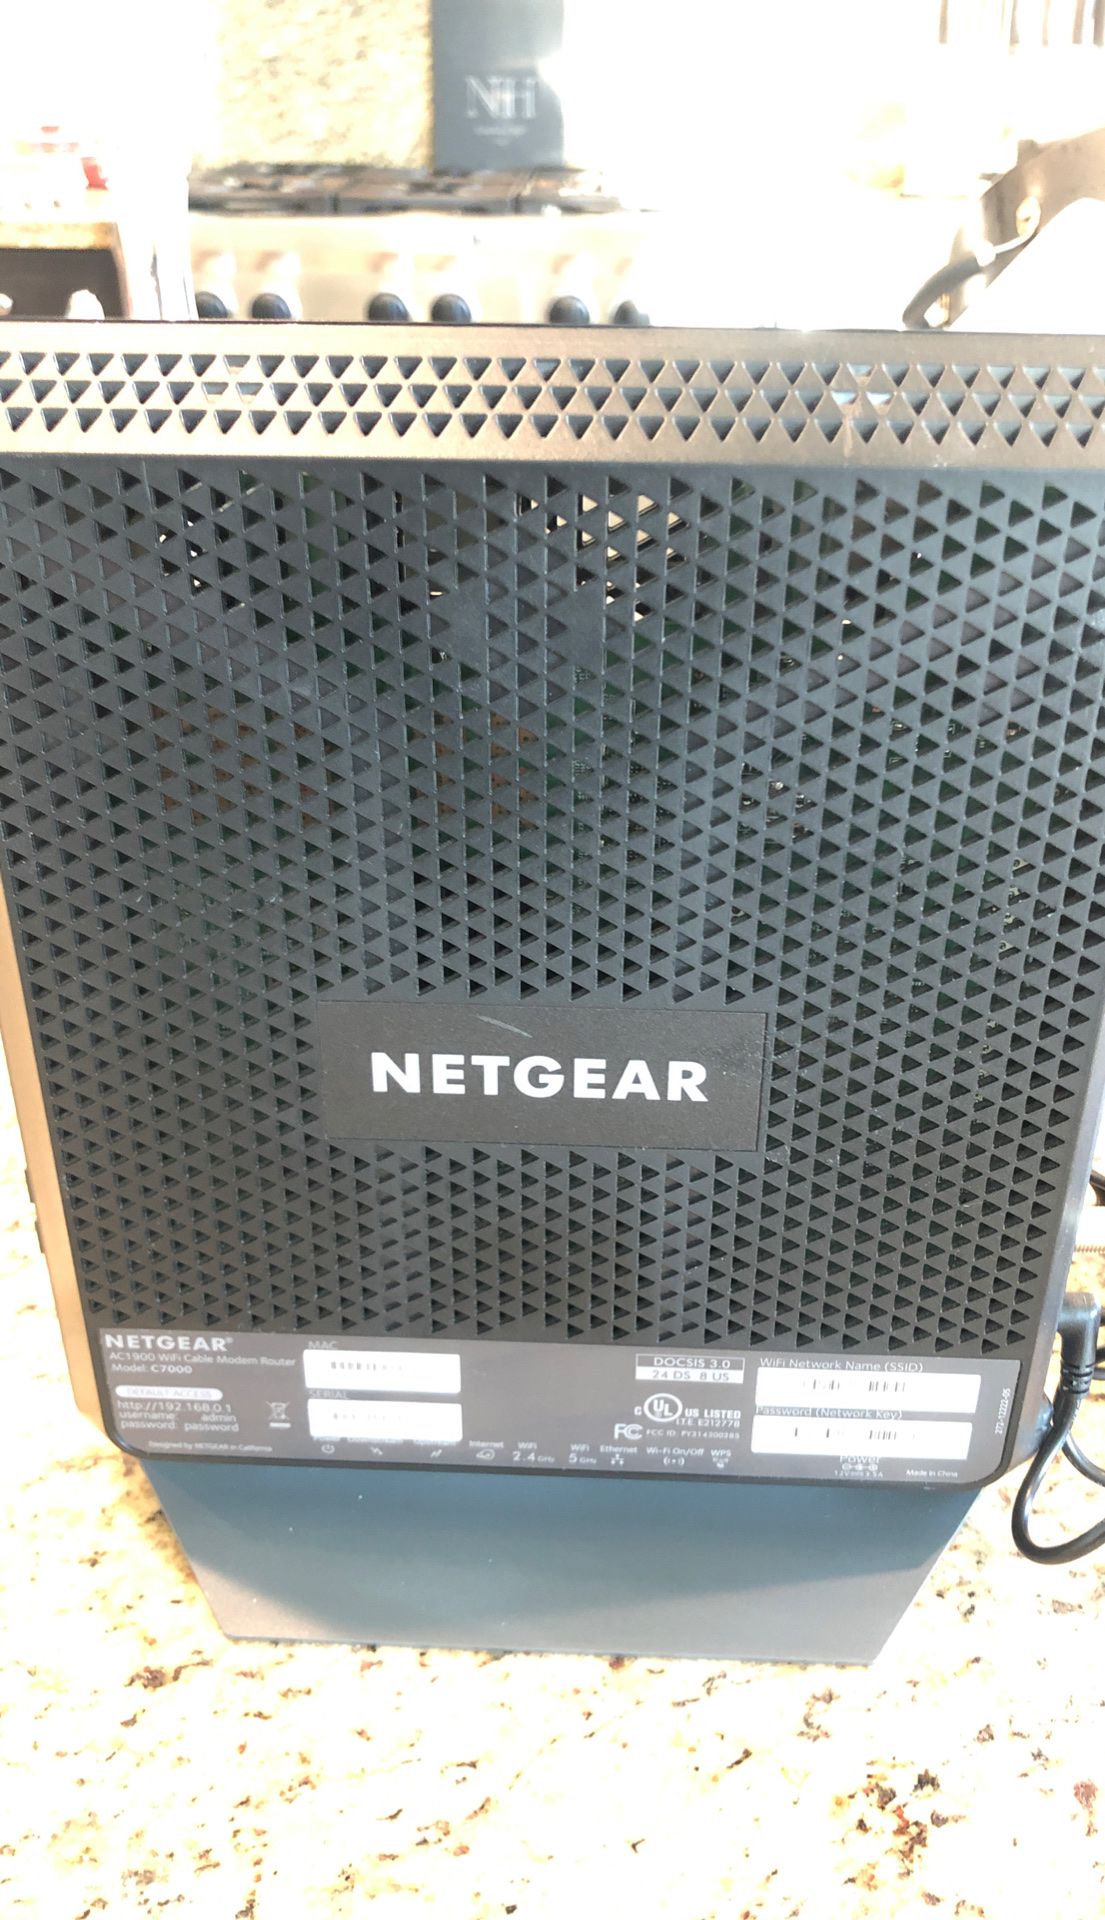 NETGEAR AC1900 WIFI CABLE MODEM ROUTER